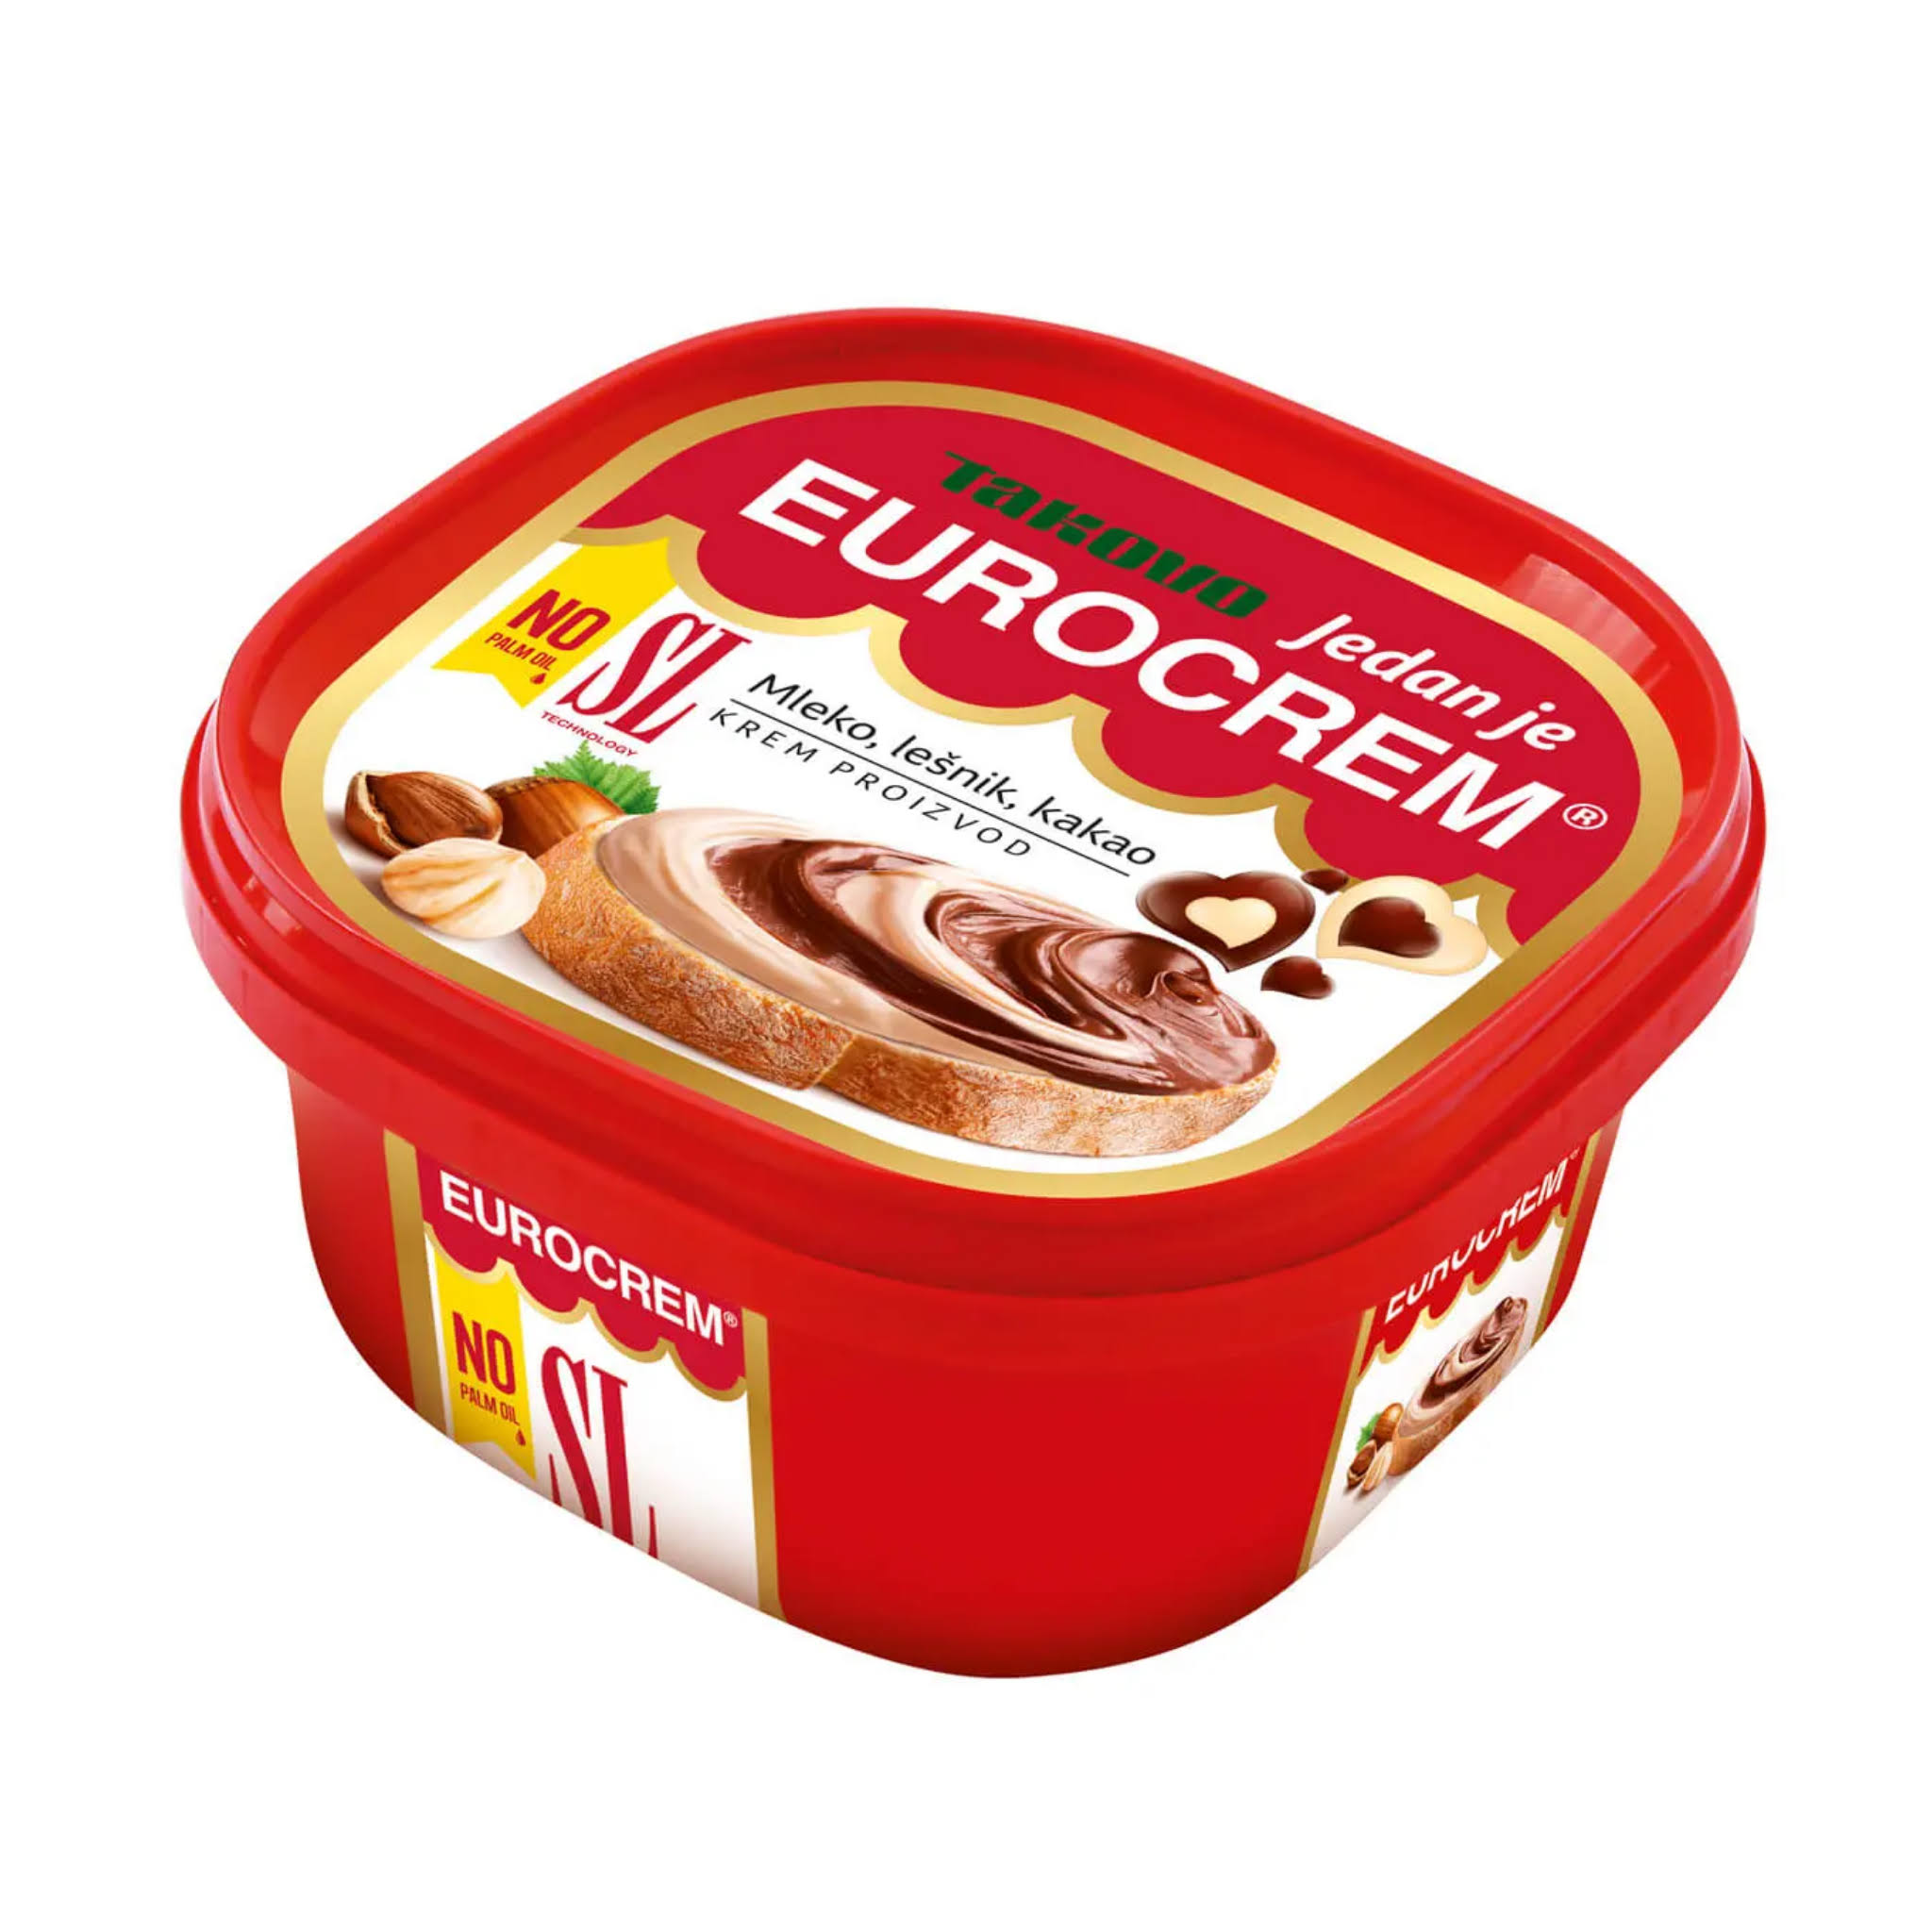 Eurocrem Nut Cream - 500g